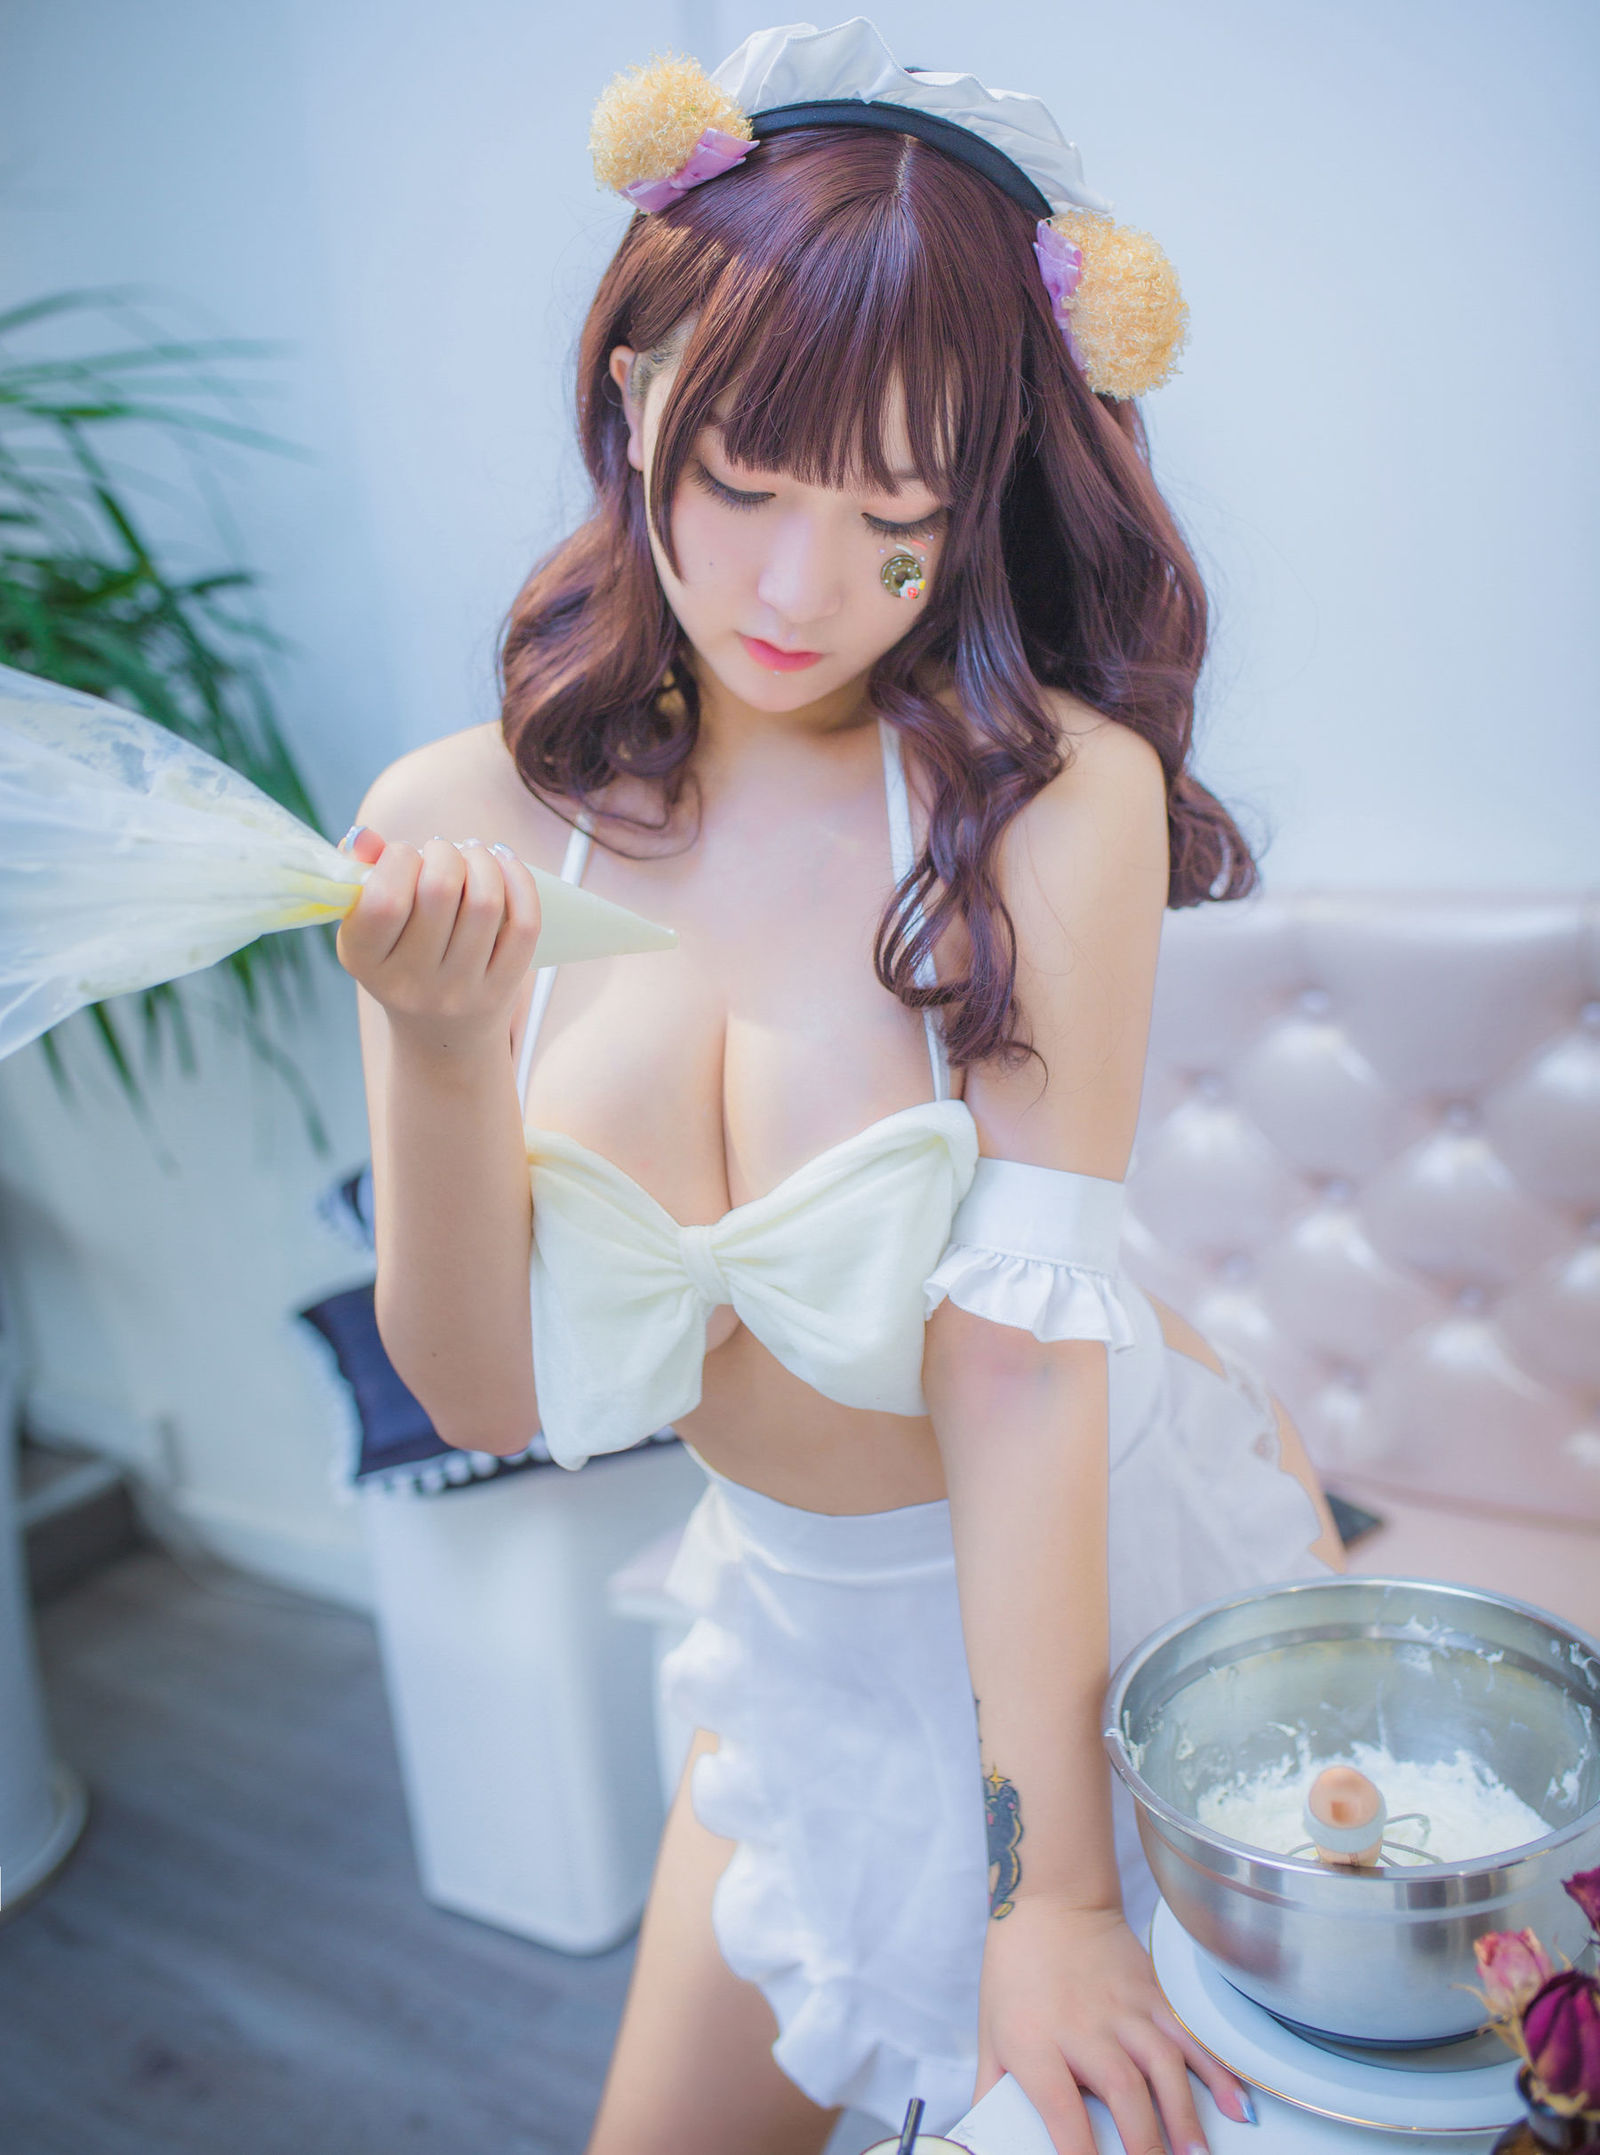 [CosPlay美女] 巨乳猫九酱Sakura - 兽の物语 写真套图3 